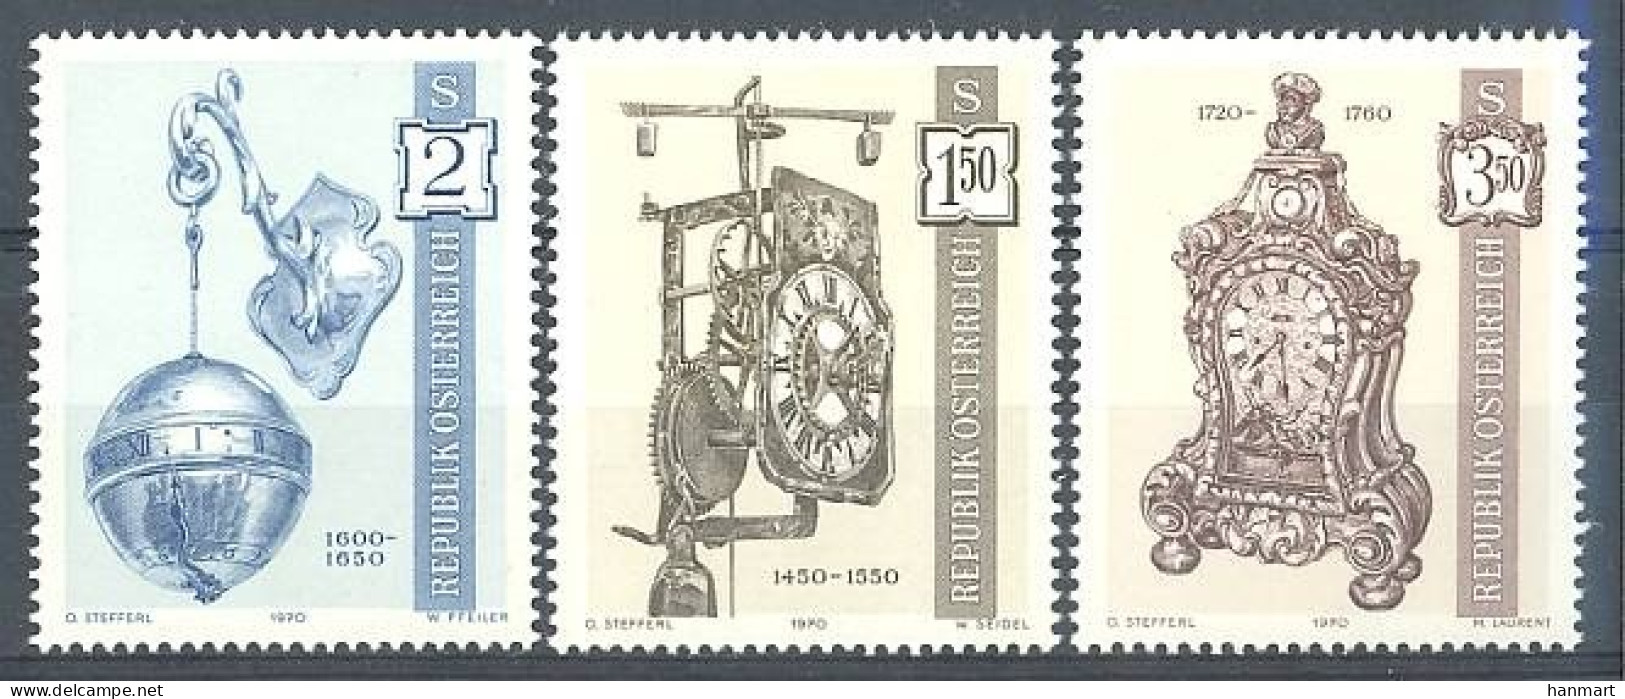 Austria 1970 Mi 1328-1330 MNH  (ZE1 AST1328-1330) - Clocks